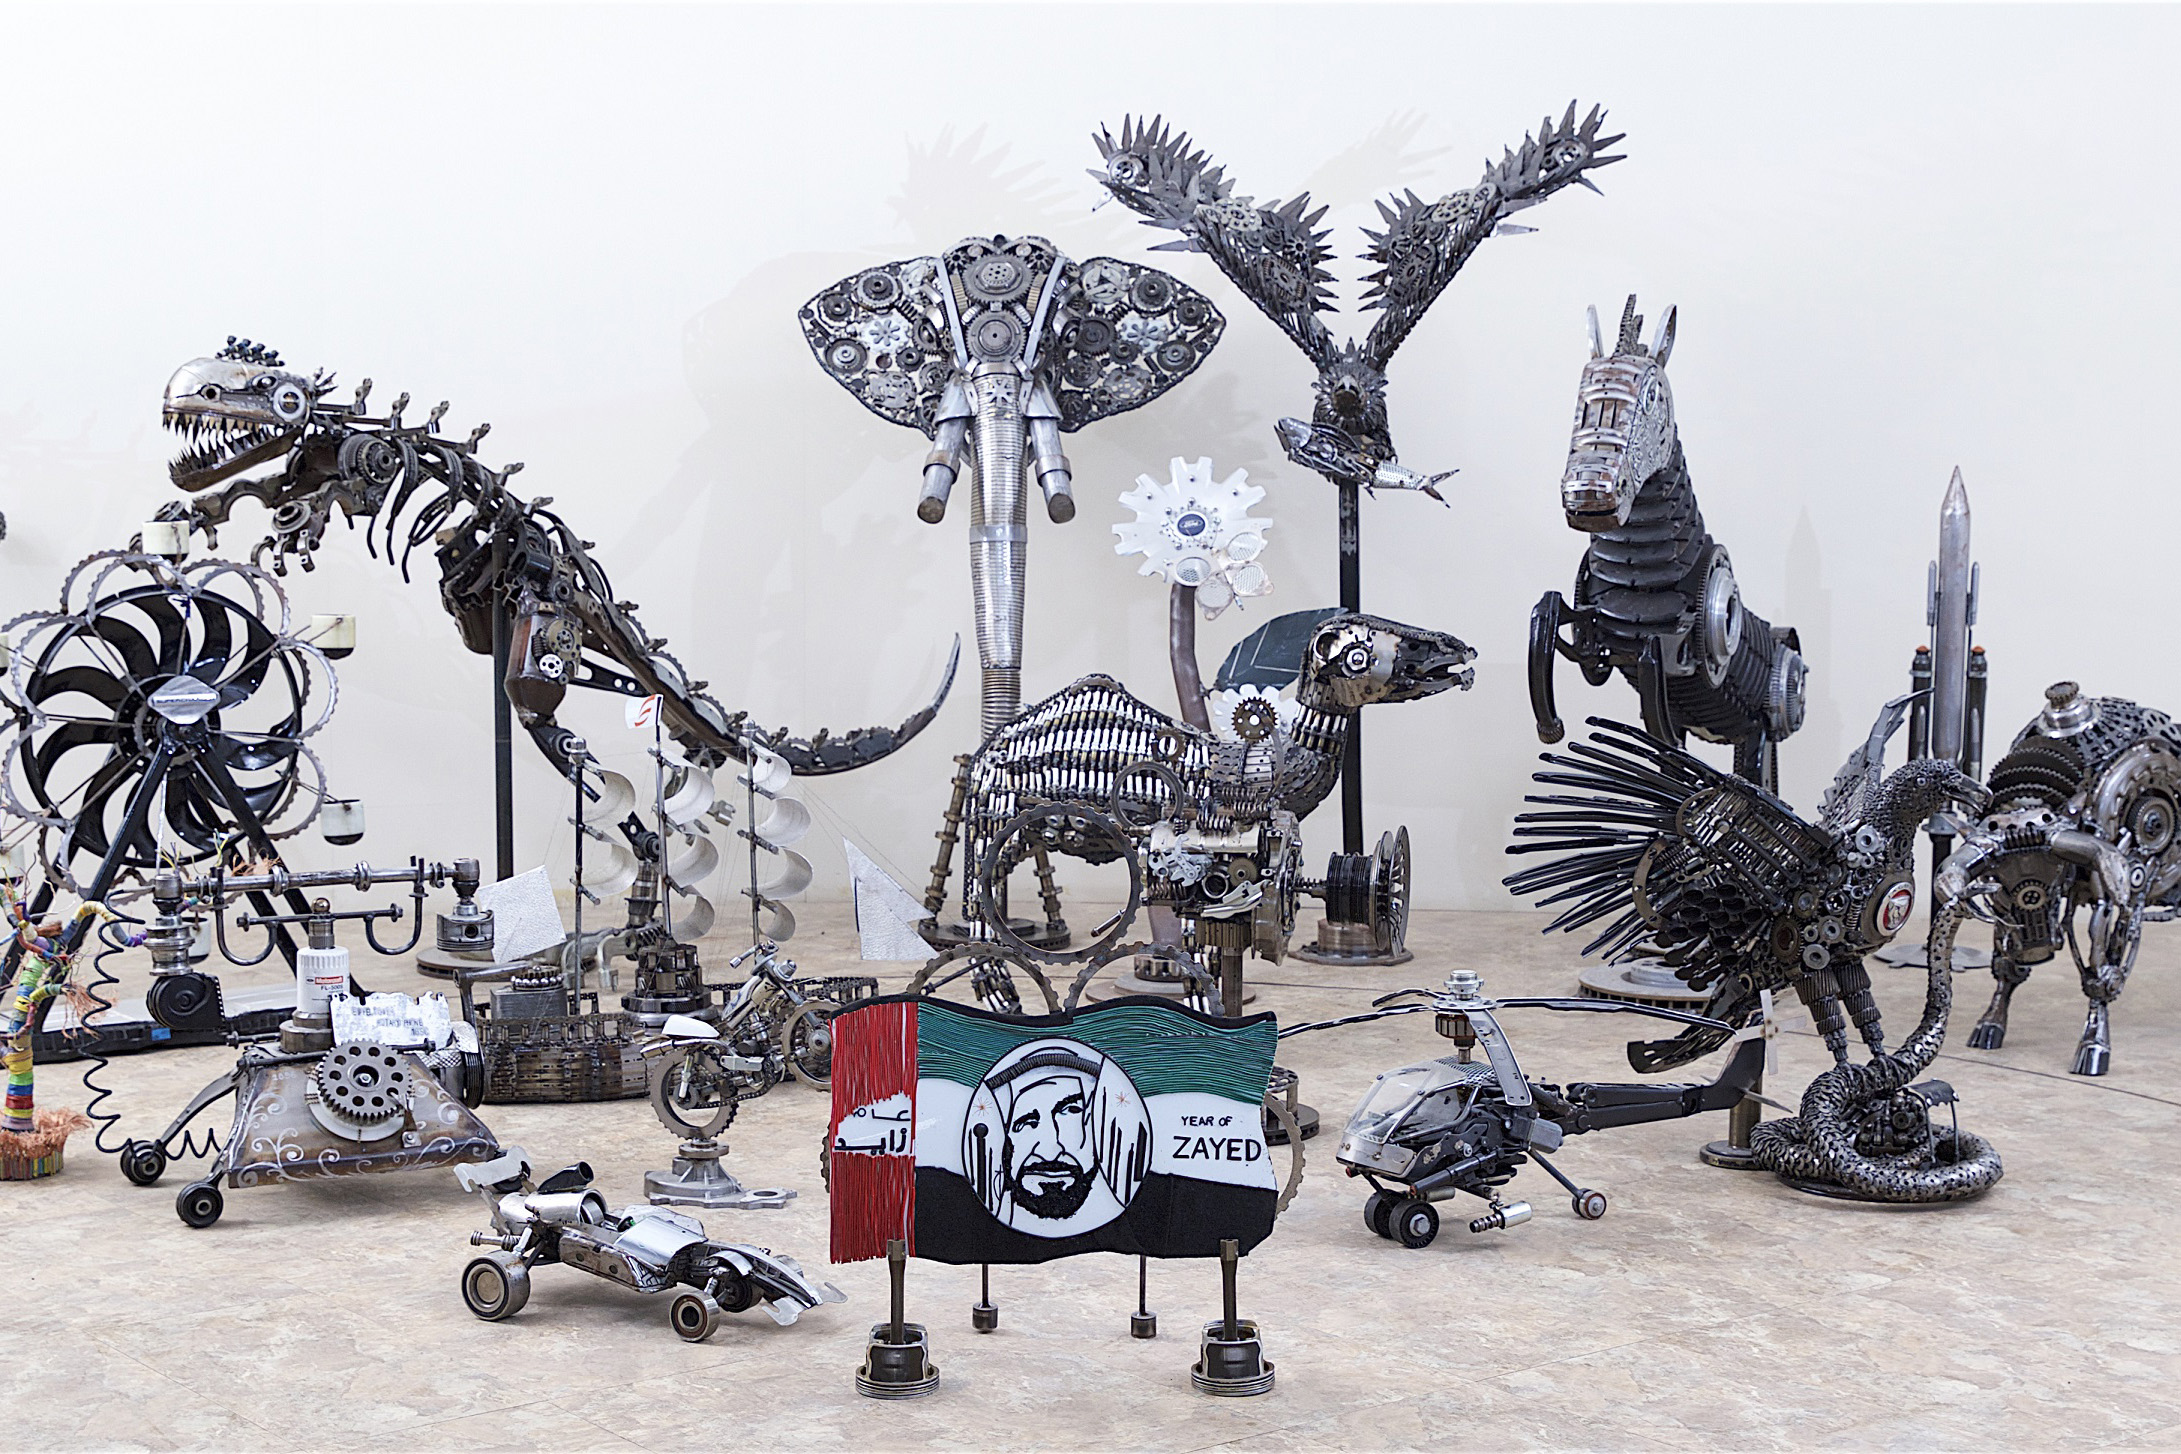 Al Tayer Motors to stage unique art exhibit featuring creations by technicians